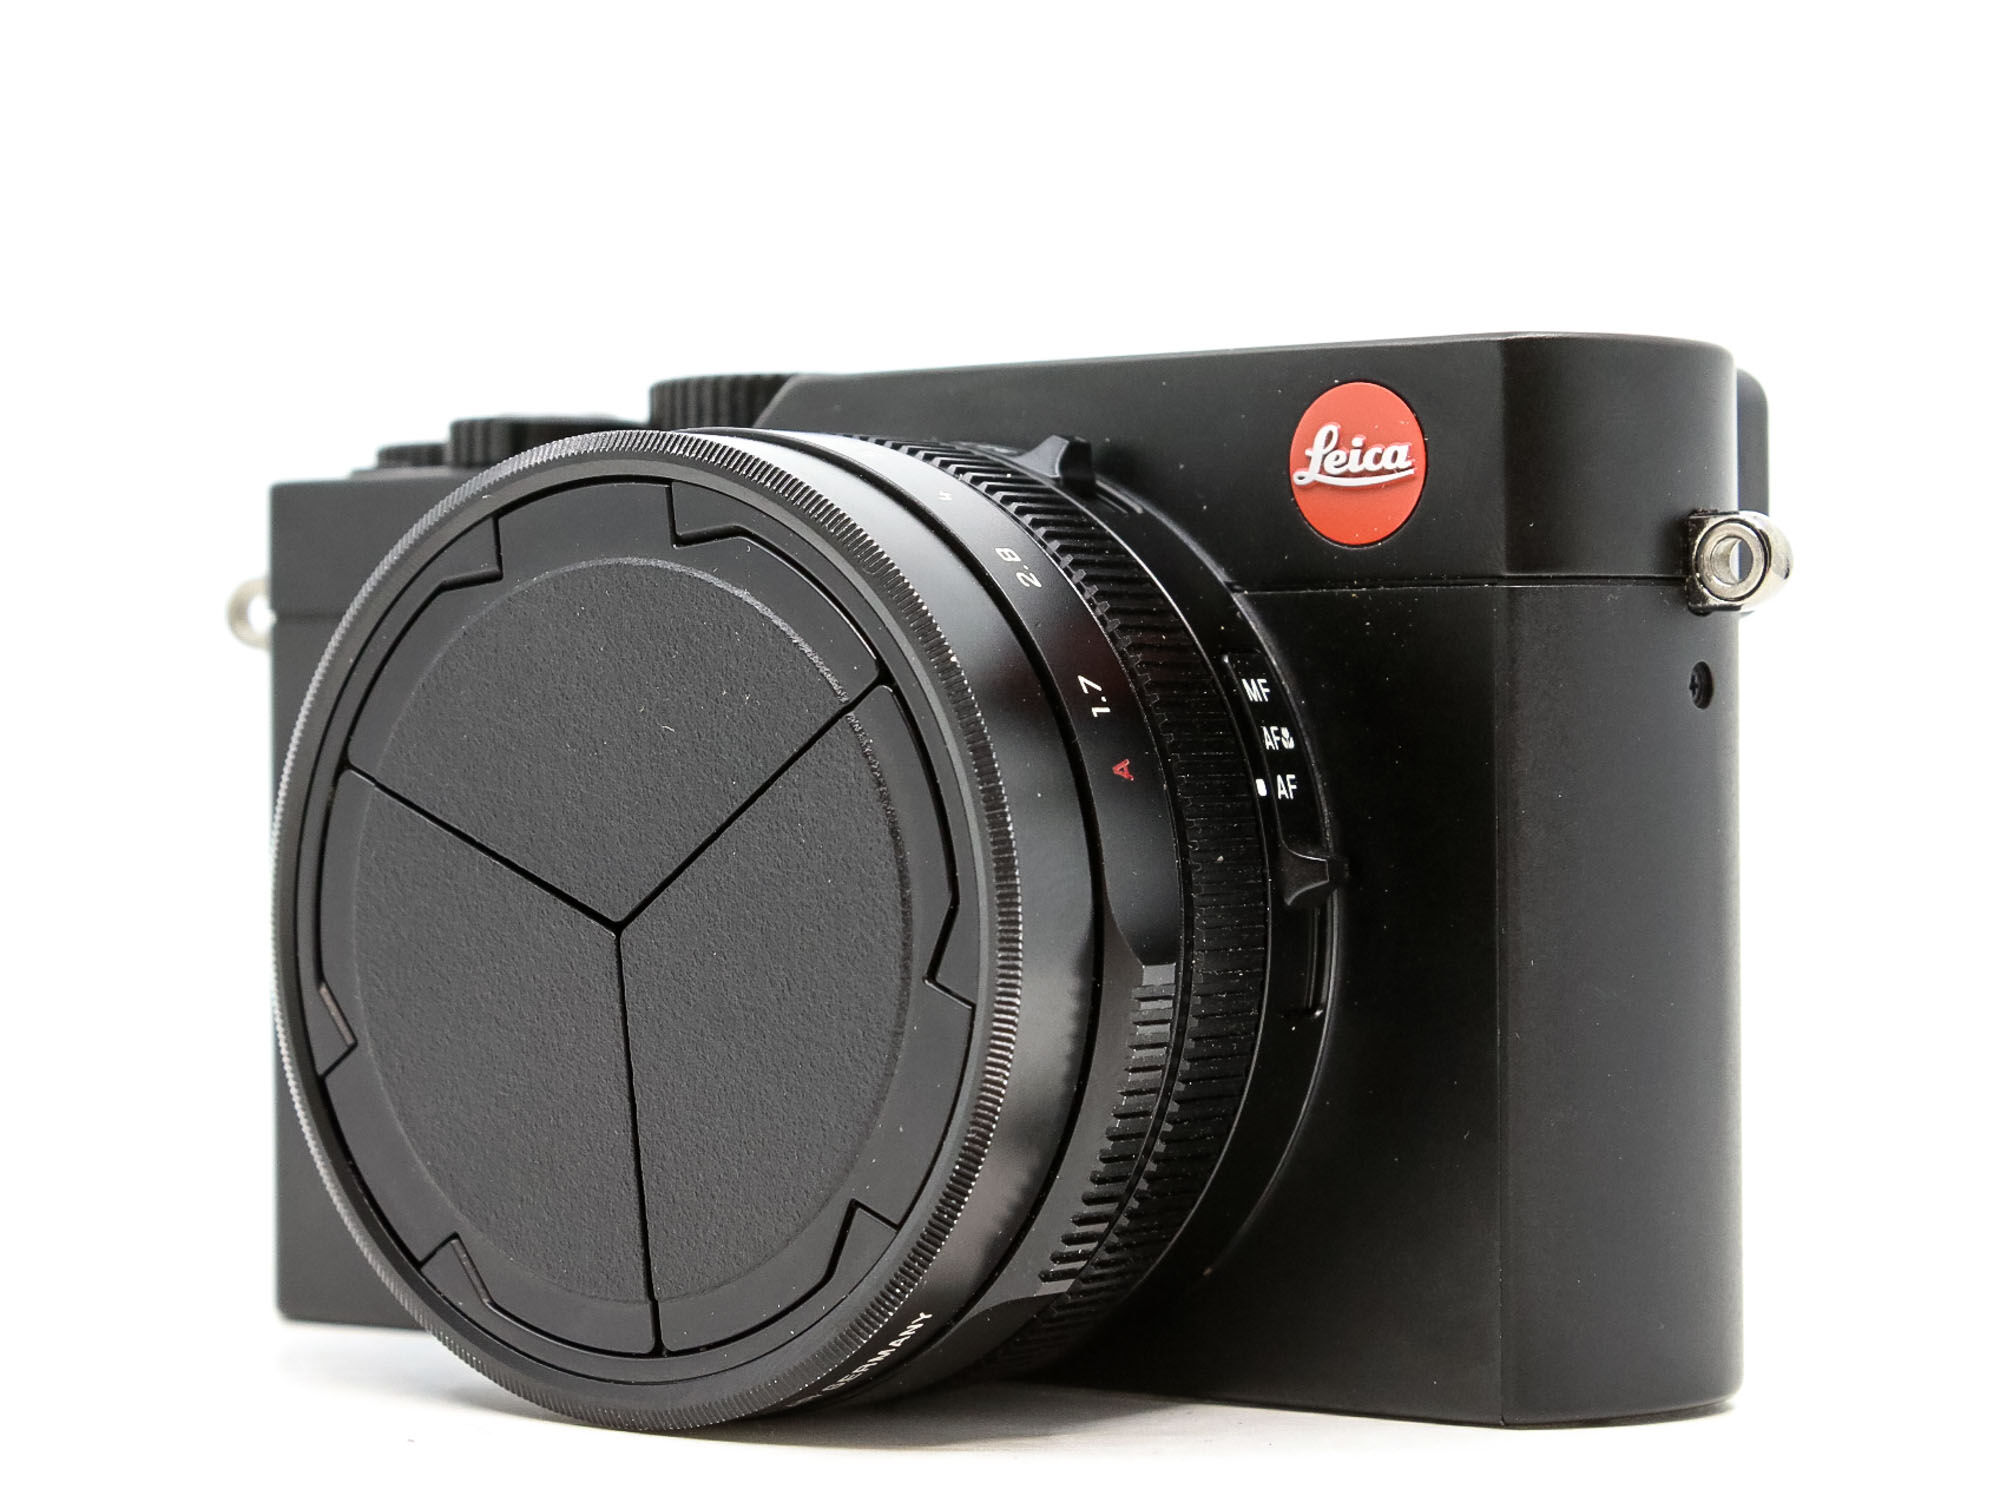 Leica D-LUX (Typ 109) (Condition: Excellent)